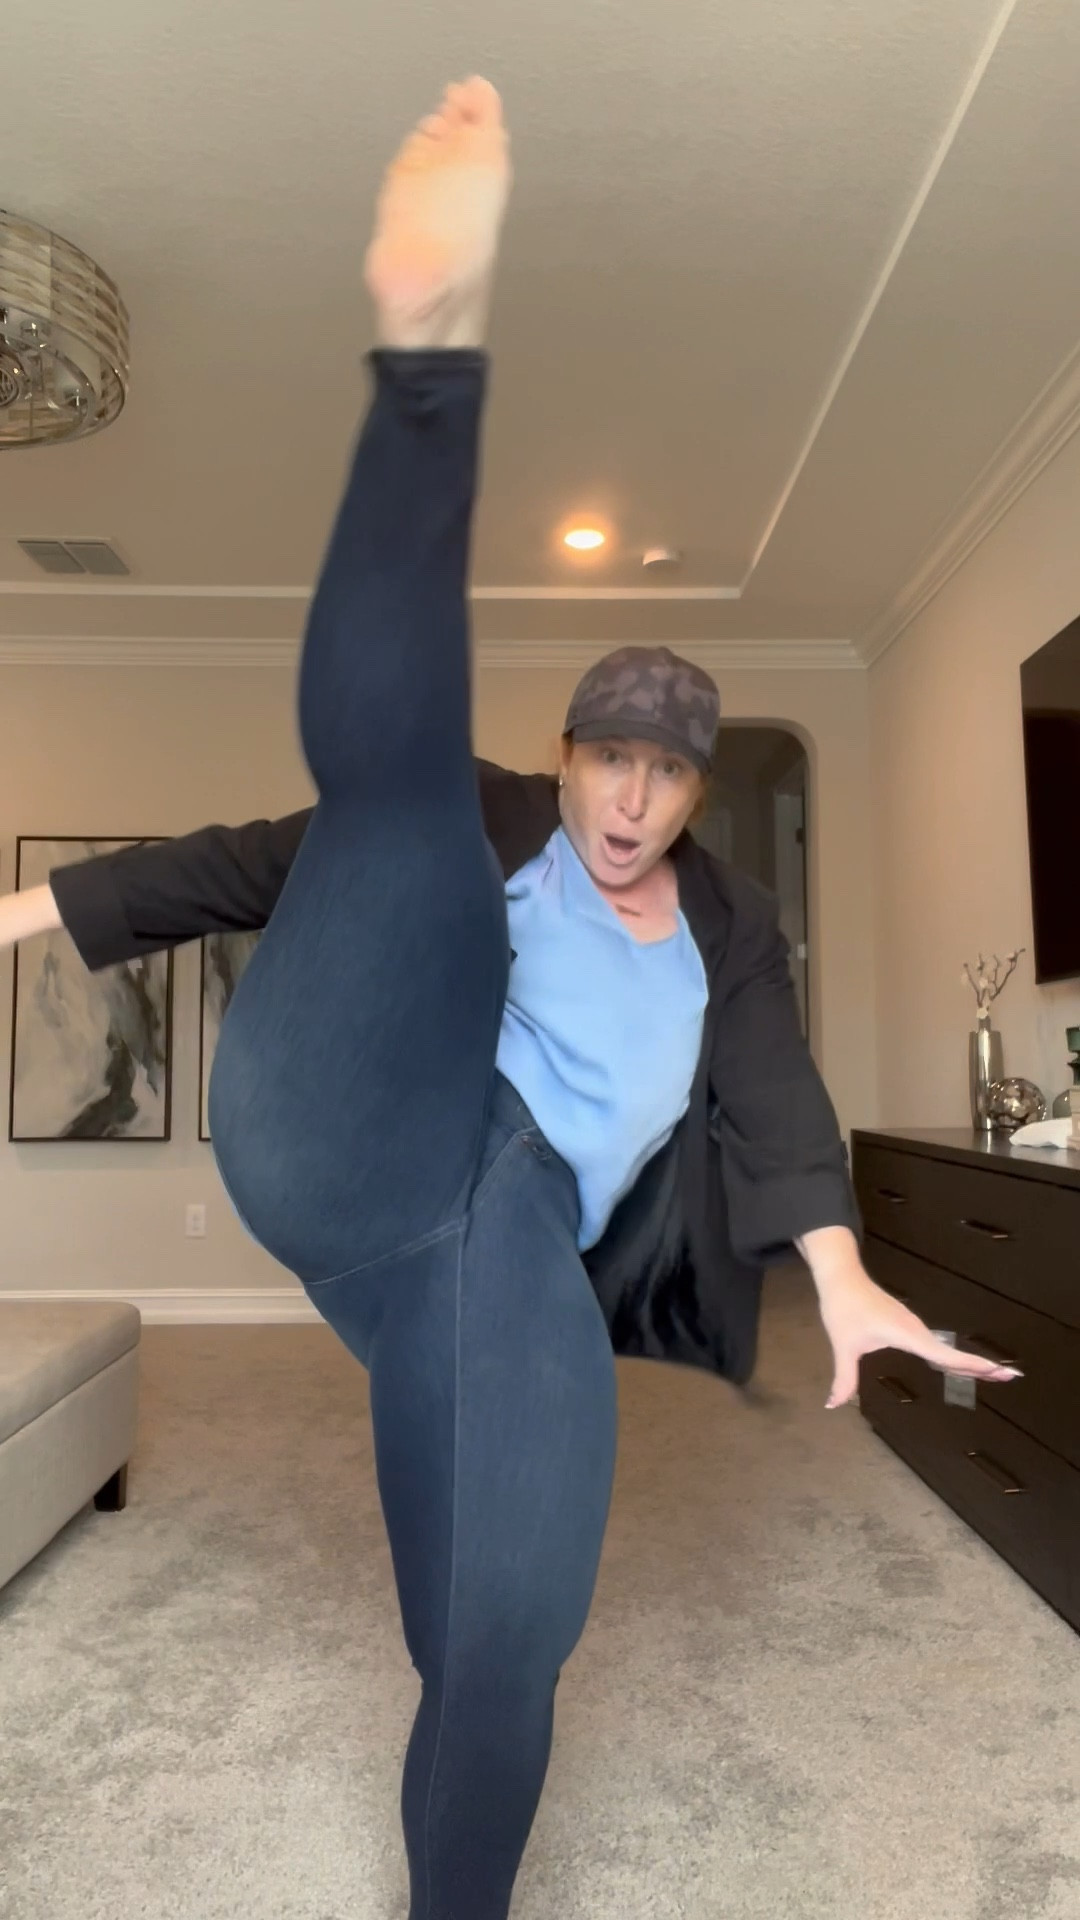 LC Lauren Conrad Womens Leggings Pant Activewear Yoga High Waist